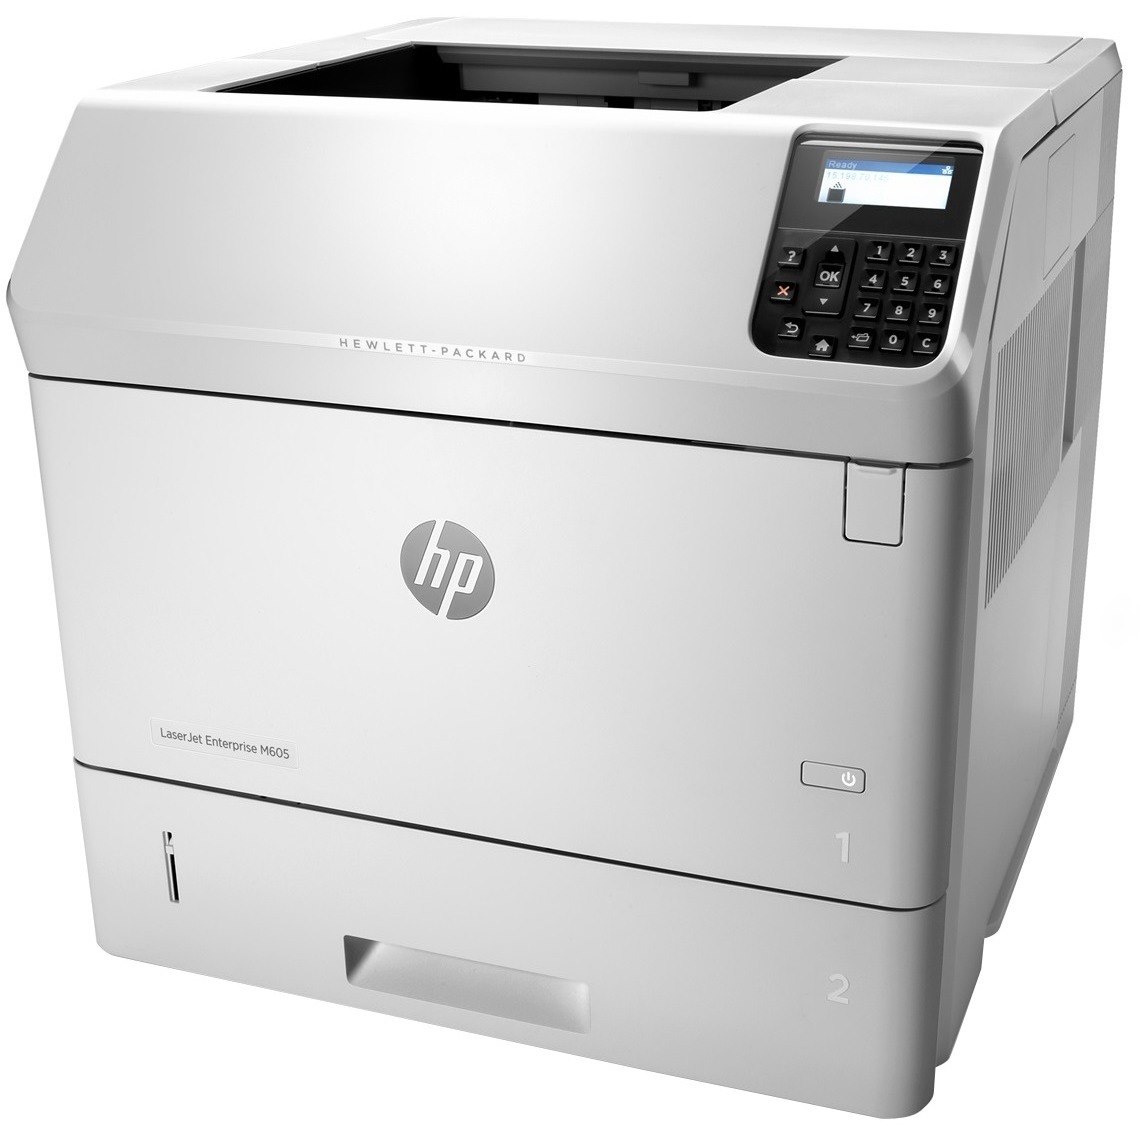 HP LaserJet M605dn Desktop Laser Printer - Monochrome